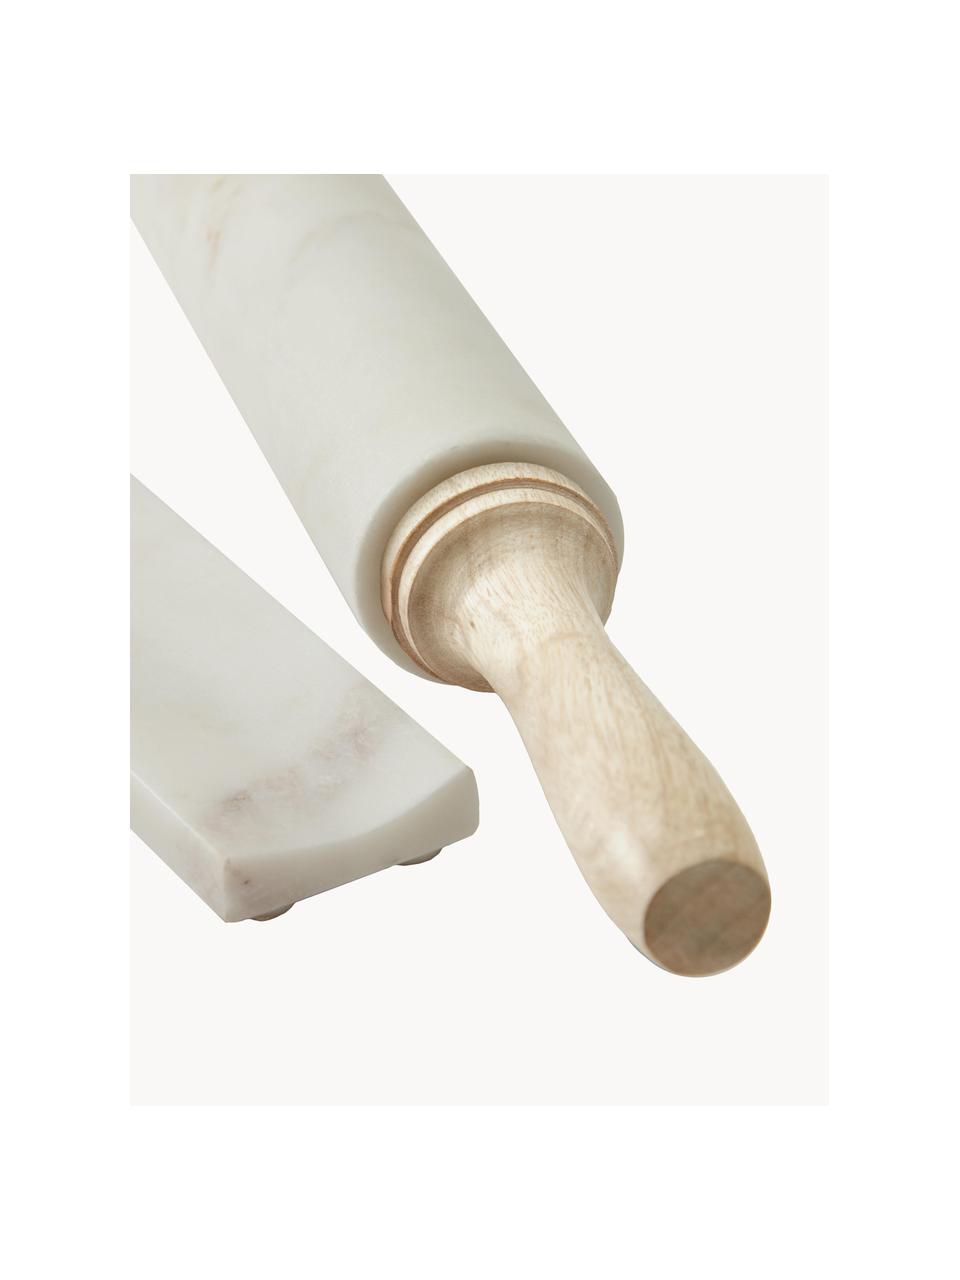 Wałek z marmuru Aimil, Biały, marmurowy, jasne drewno naturalne, Ø 7 x D 41 cm